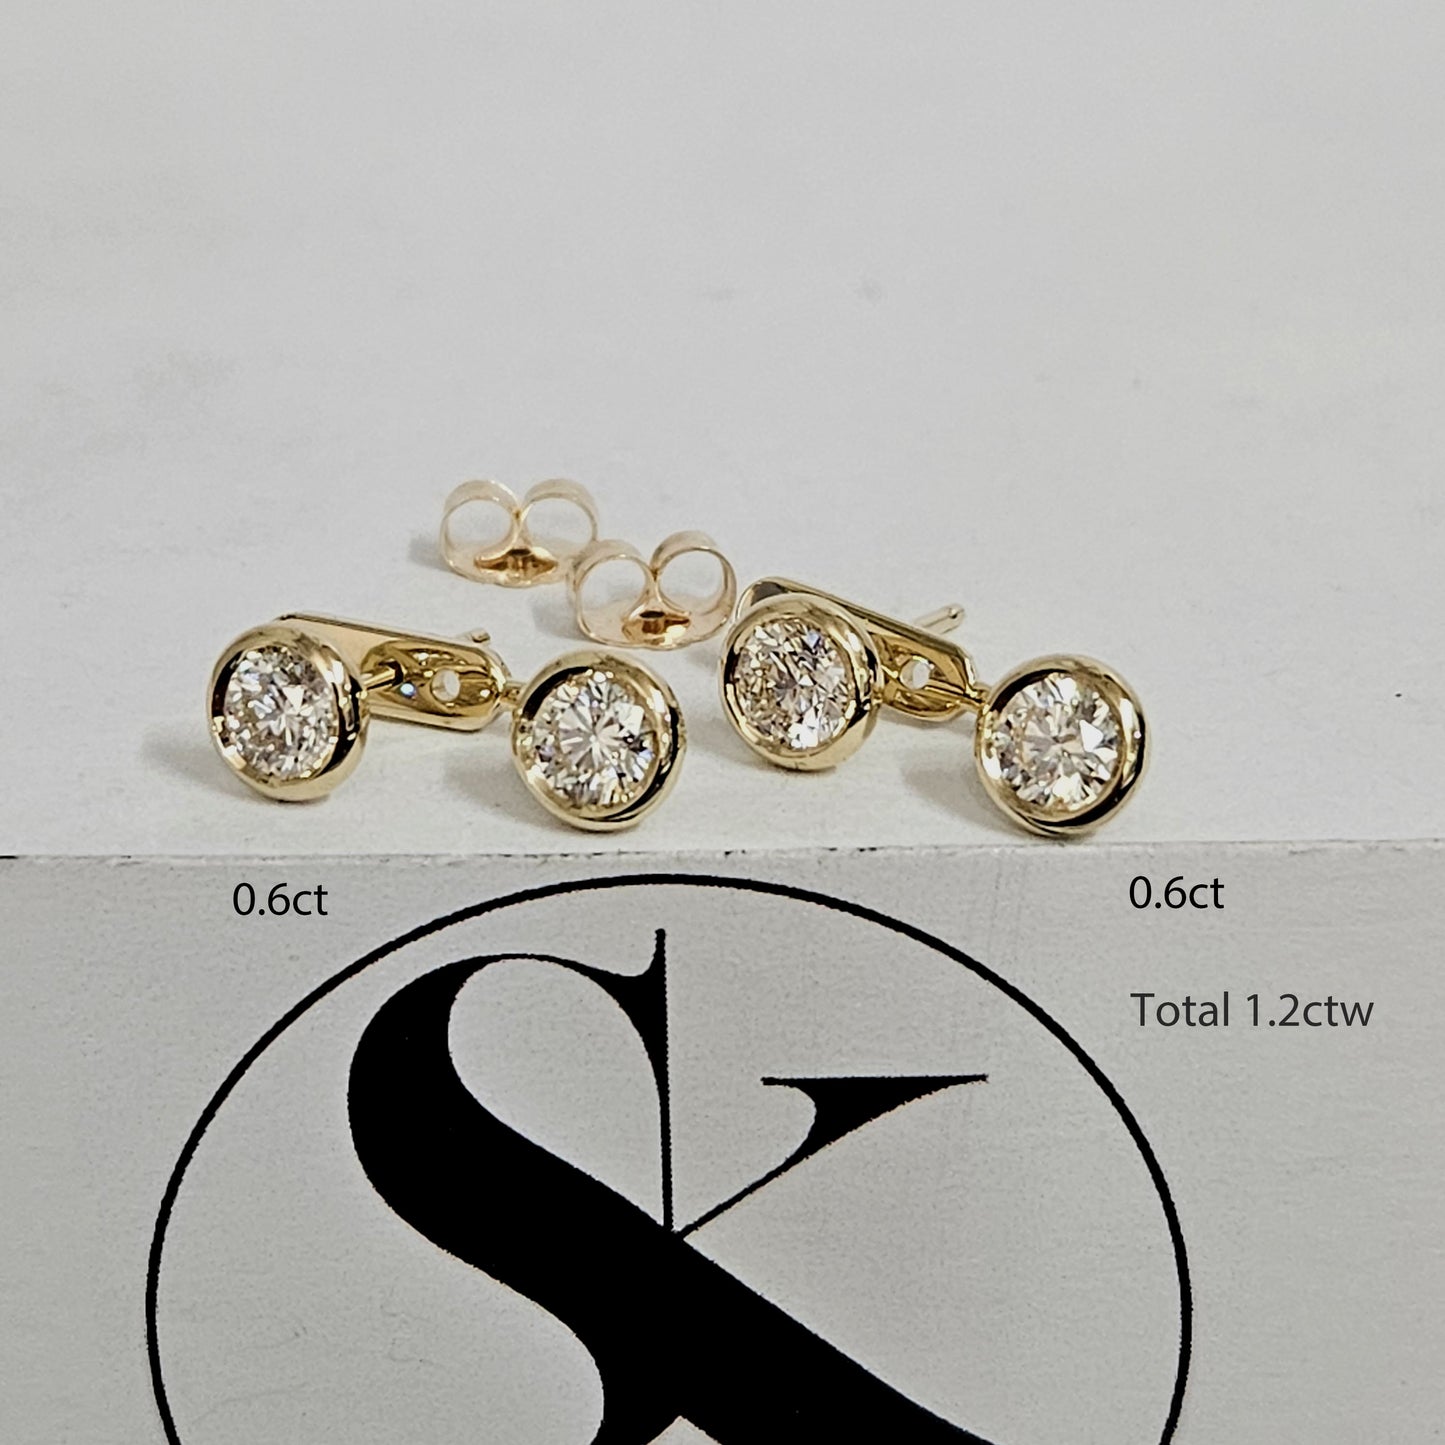 Diamond Jacket Earrings / Bezel Set Round Diamond Earrings / Ear Jacket Earrings / Diamond Earrings / Single or Pair Earrings/Gifts for her